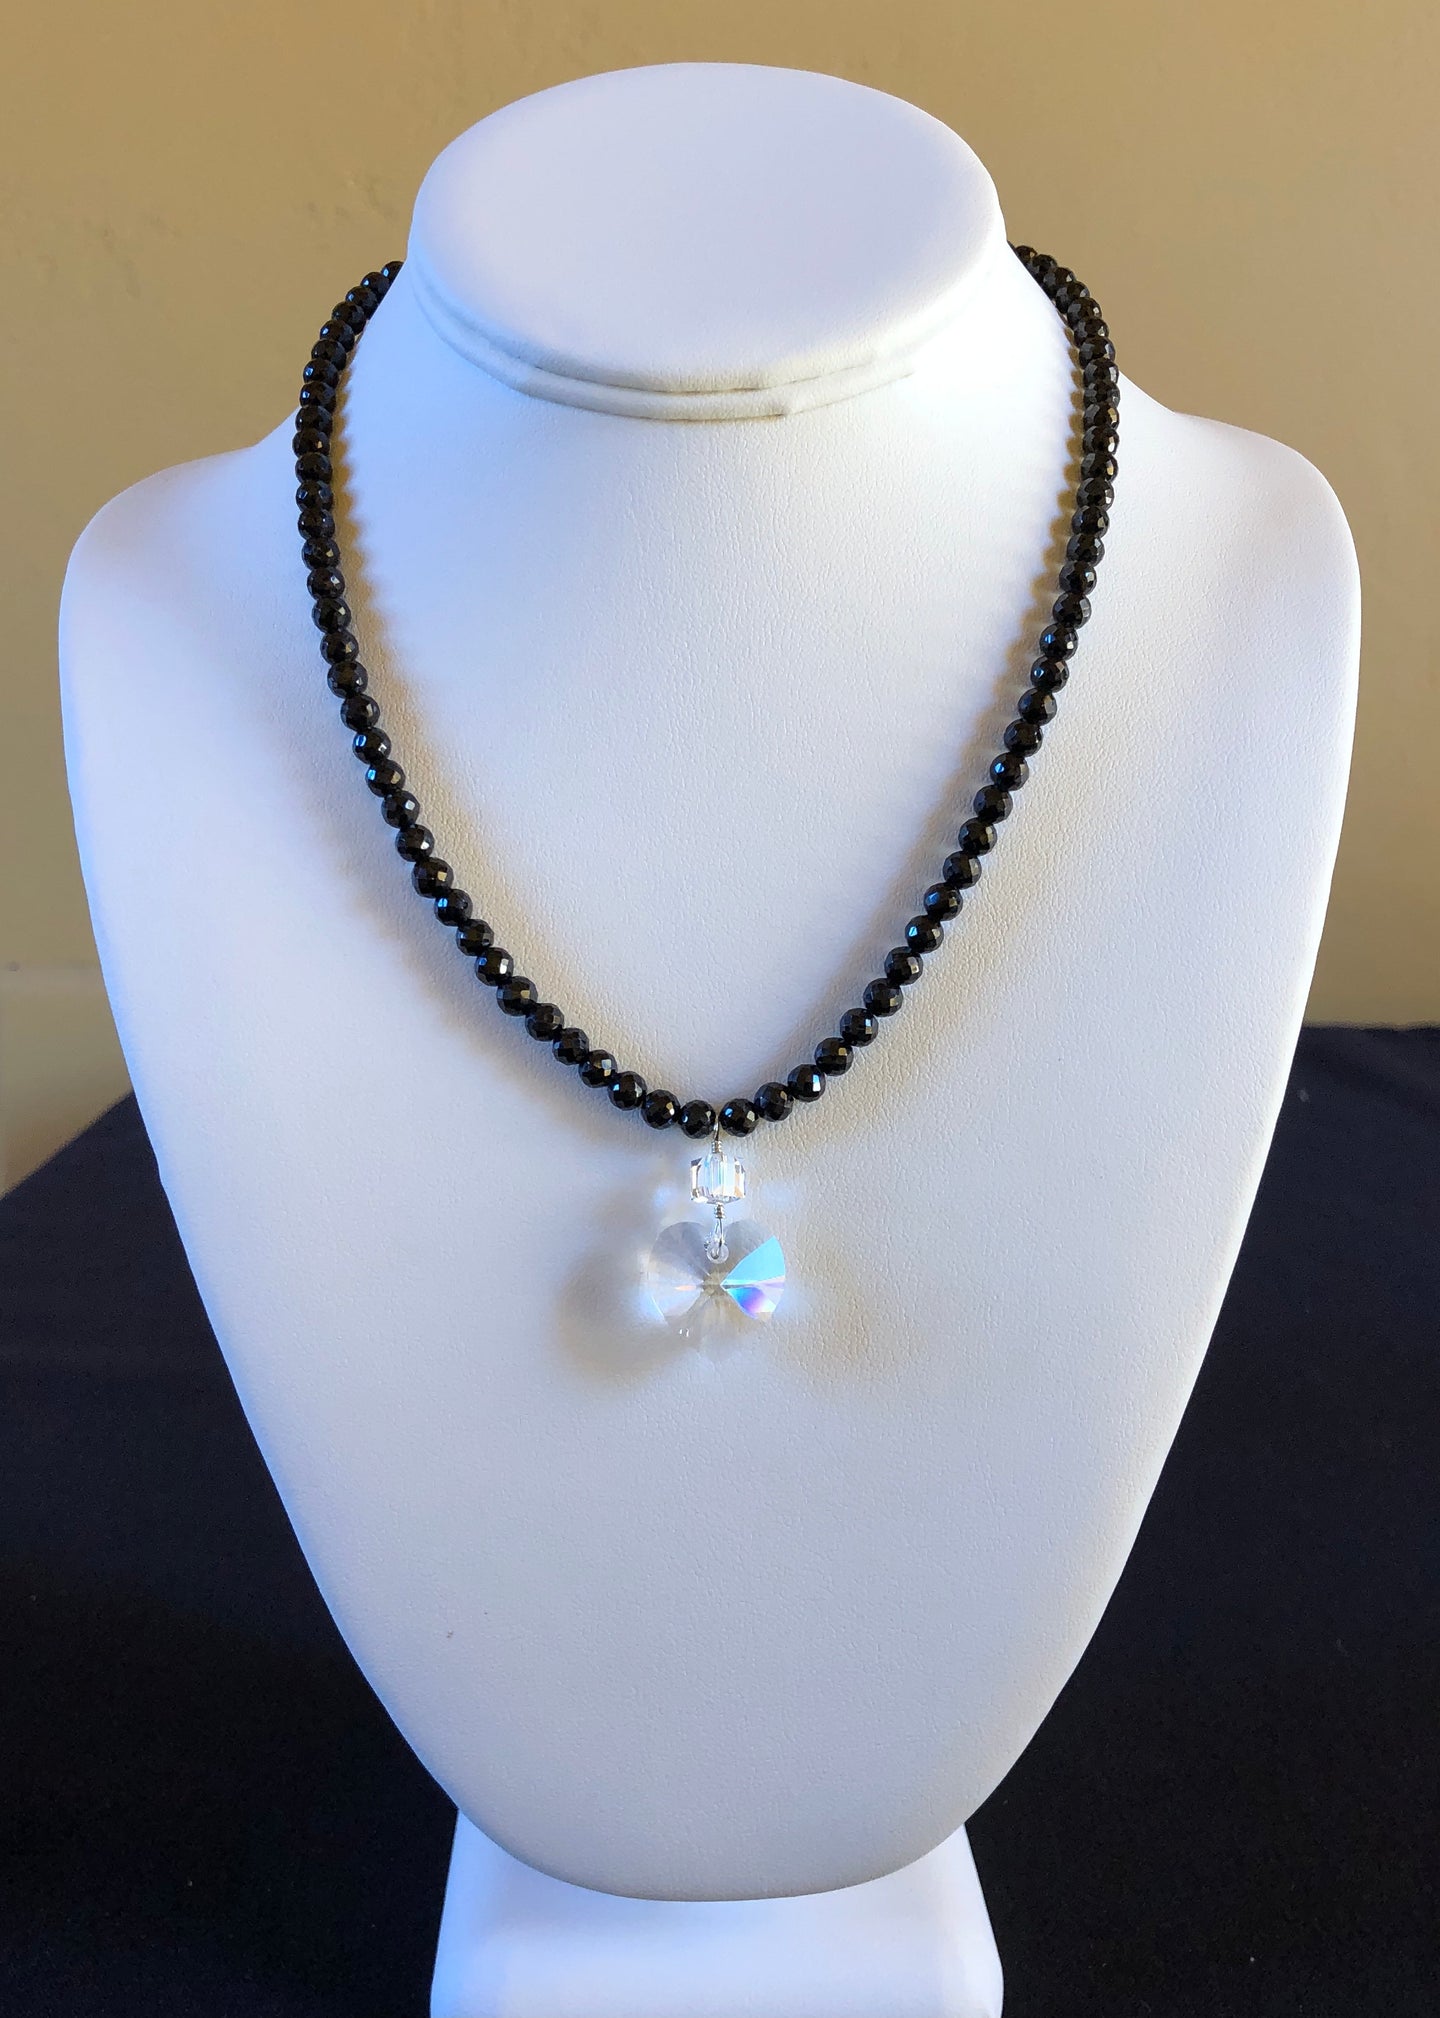 Necklace - Black Spinel w/ Swarovski Crystal Heart Pendant